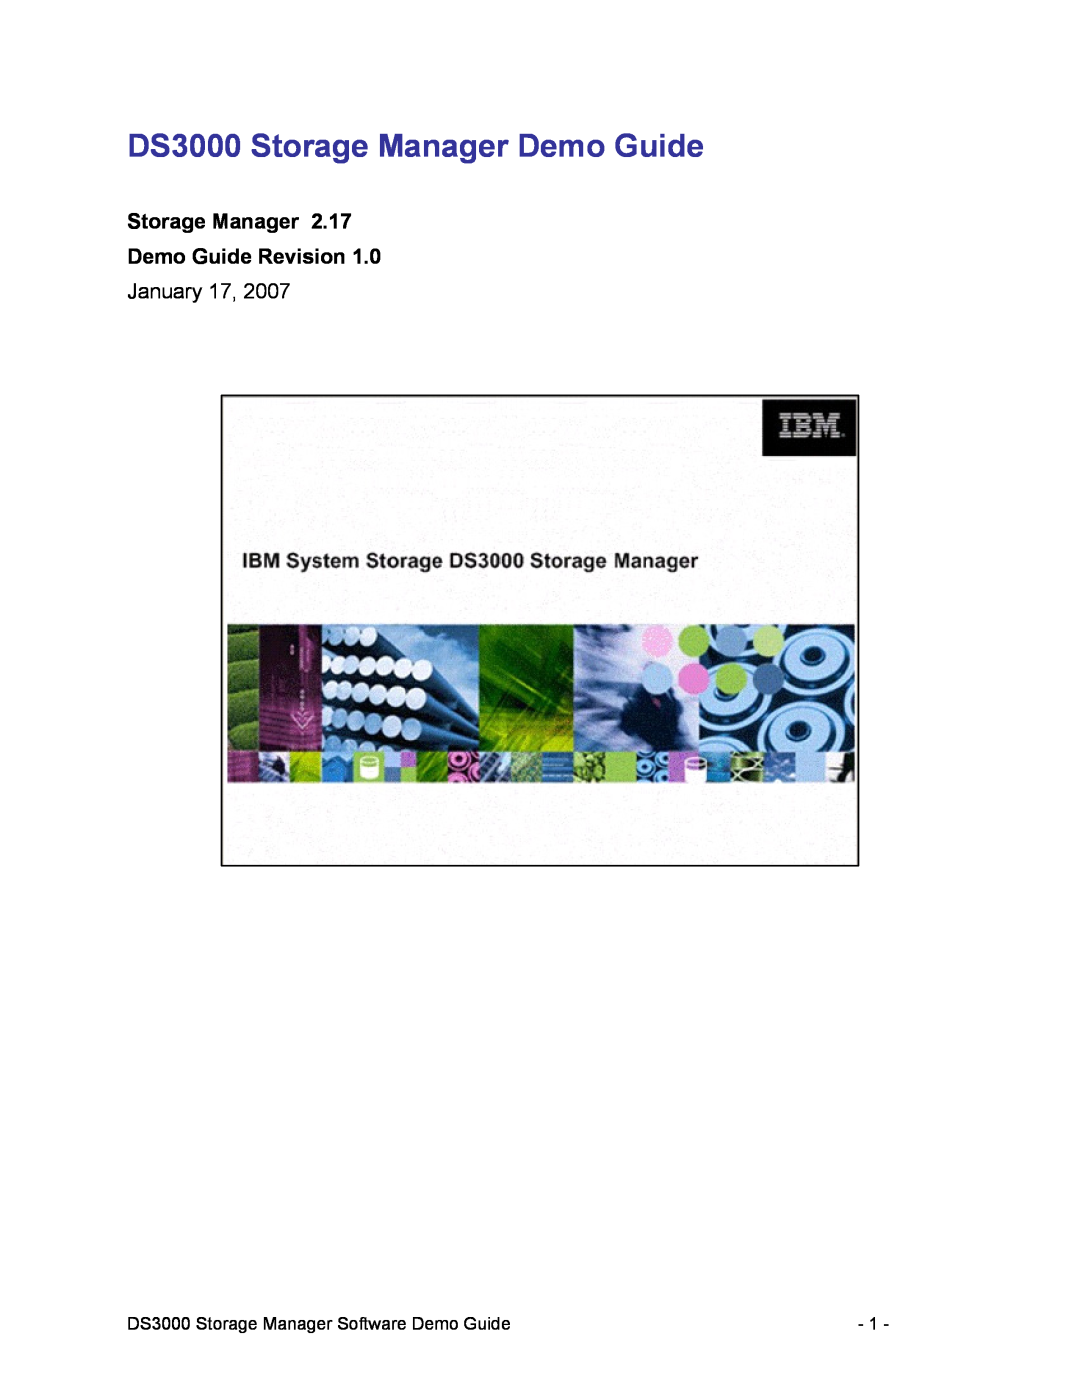 IBM manual Storage Manager Demo Guide Revision, DS3000 Storage Manager Demo Guide, January 17 